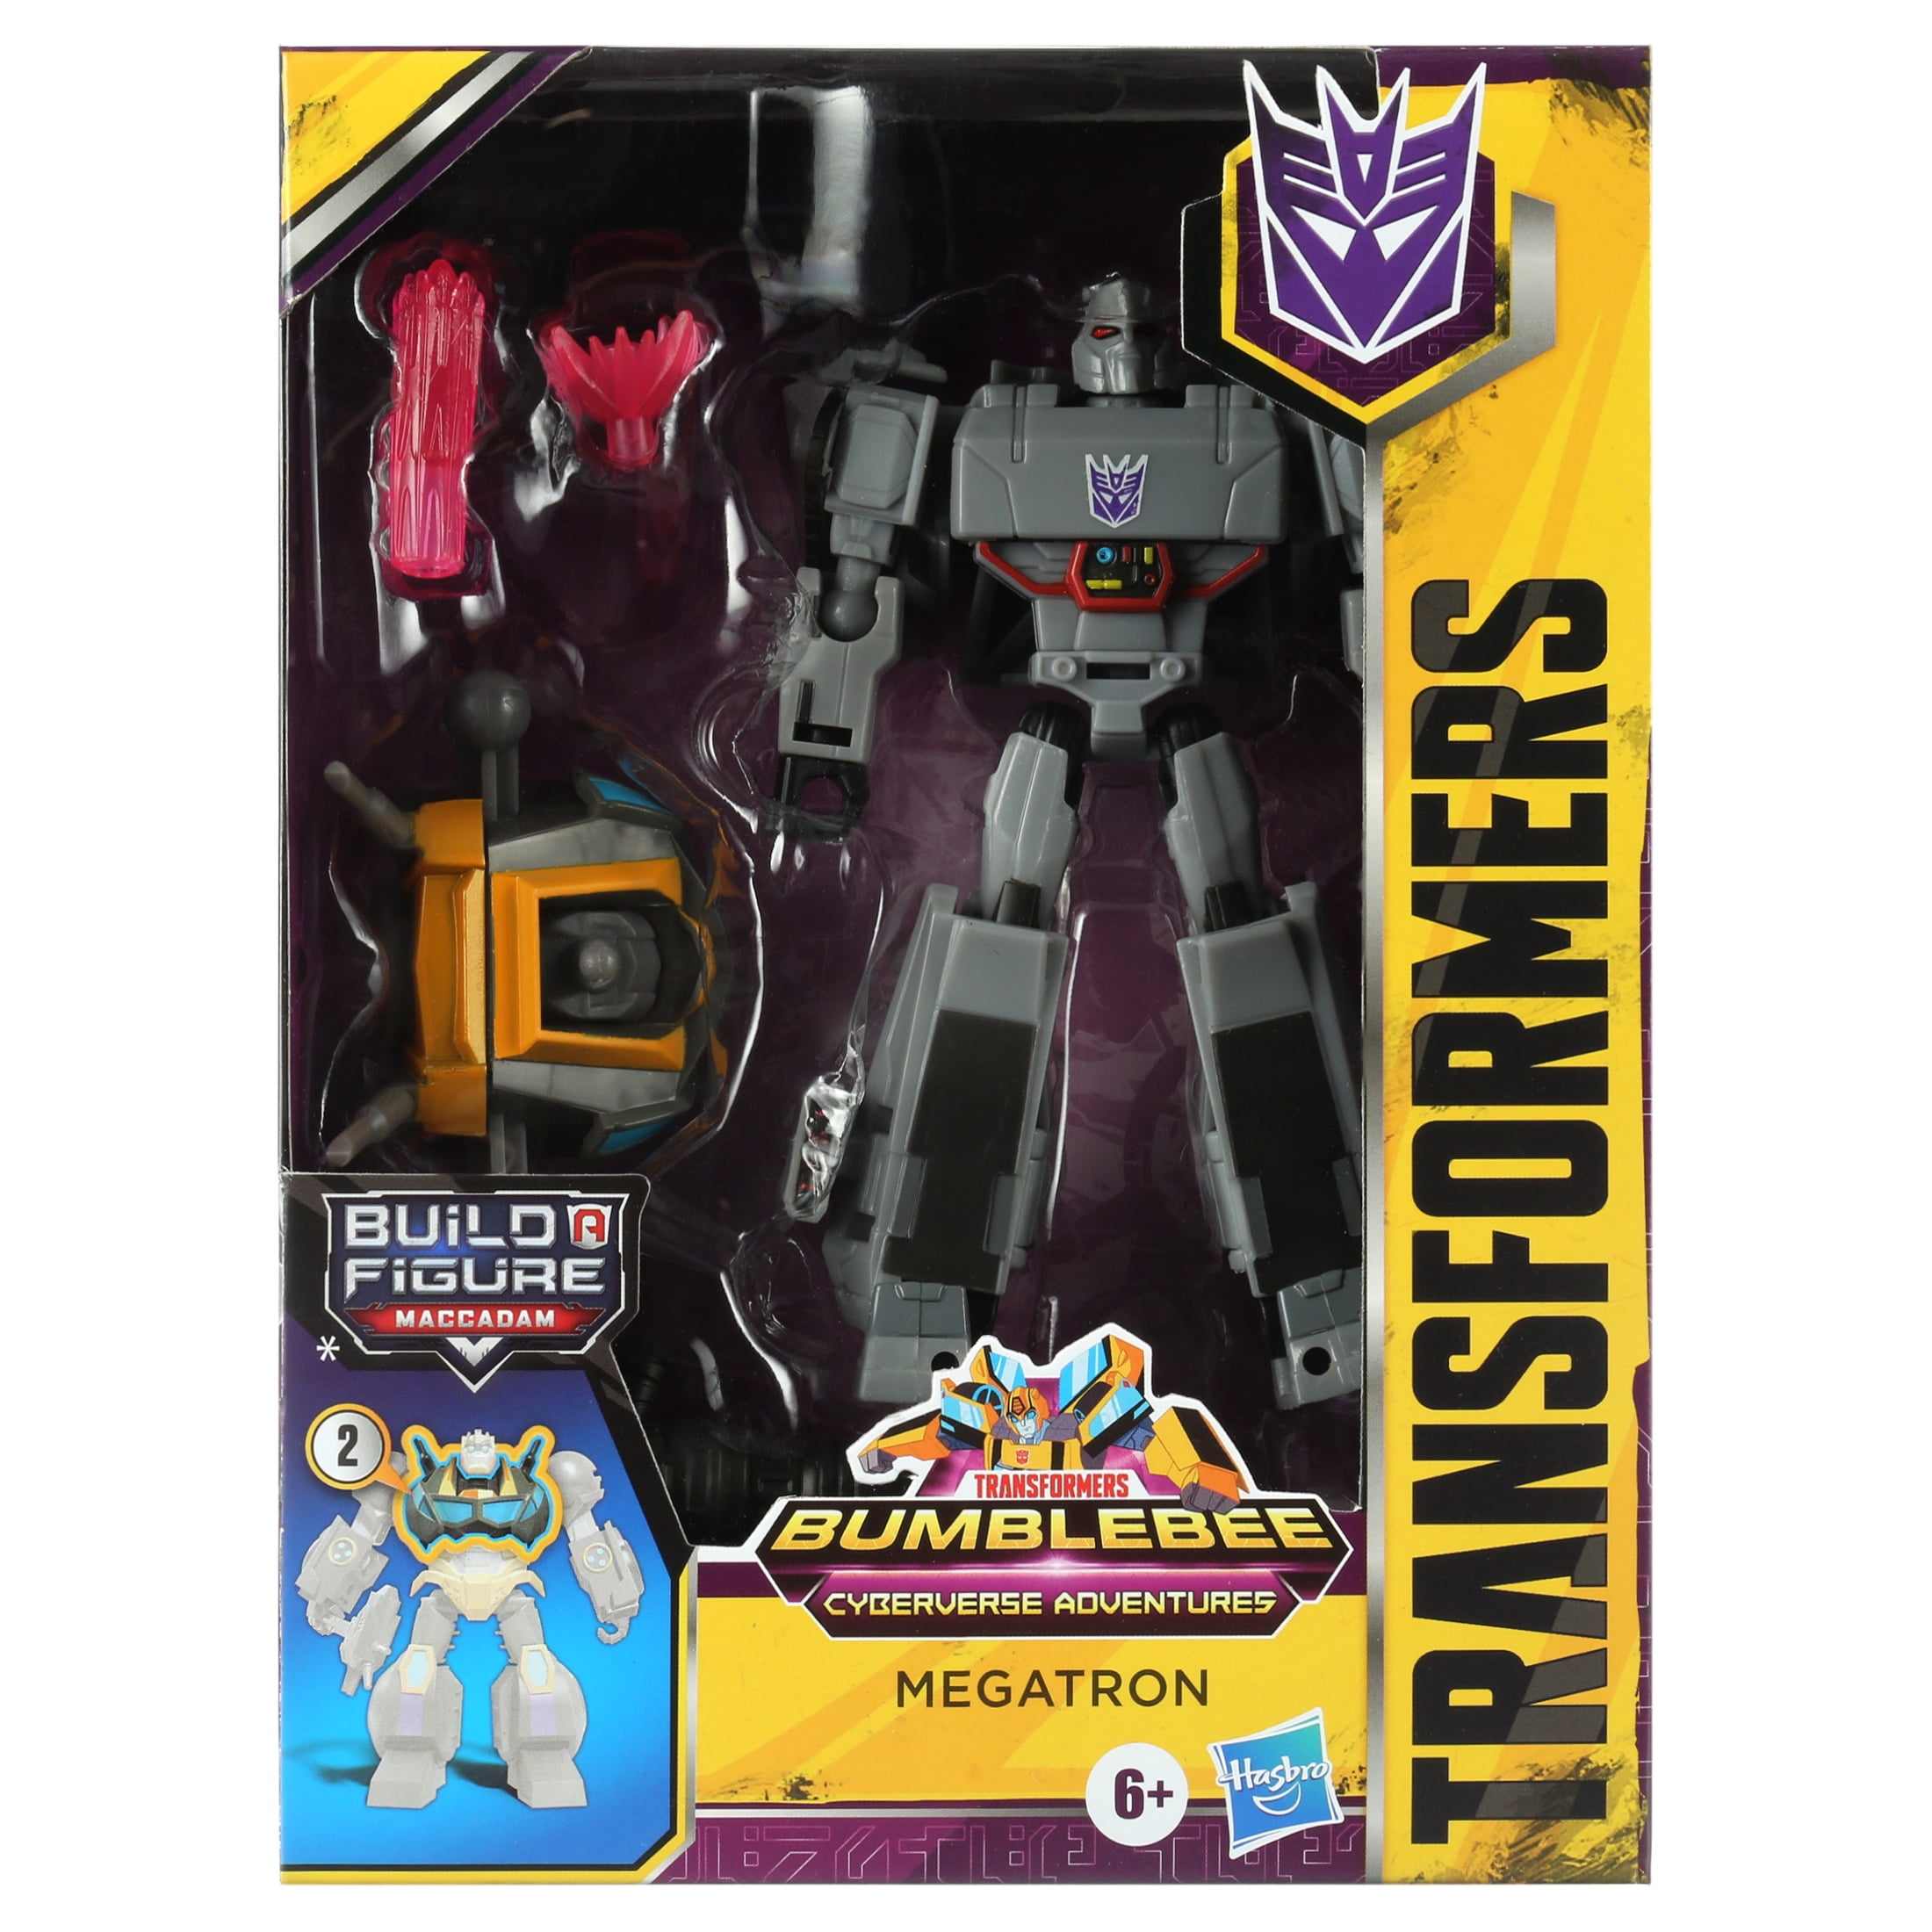 2019 Hasbro Transformers Limited Edition Bumblebee Mini Figure Toy 